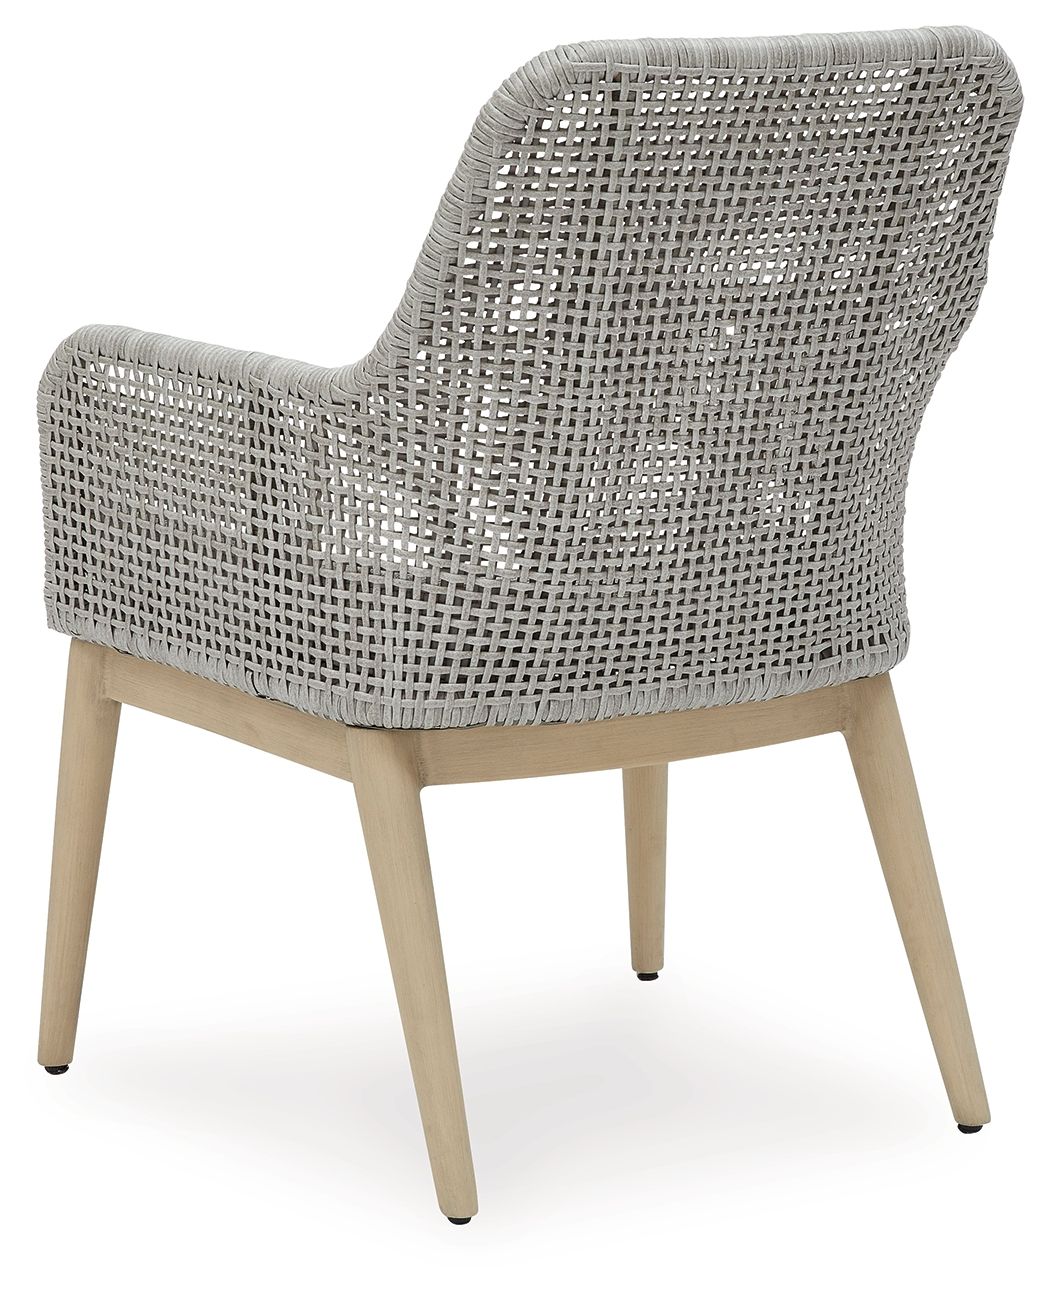 Seton Creek - Gray - Arm Chair With Cushion (Set of 2) - Tony's Home Furnishings